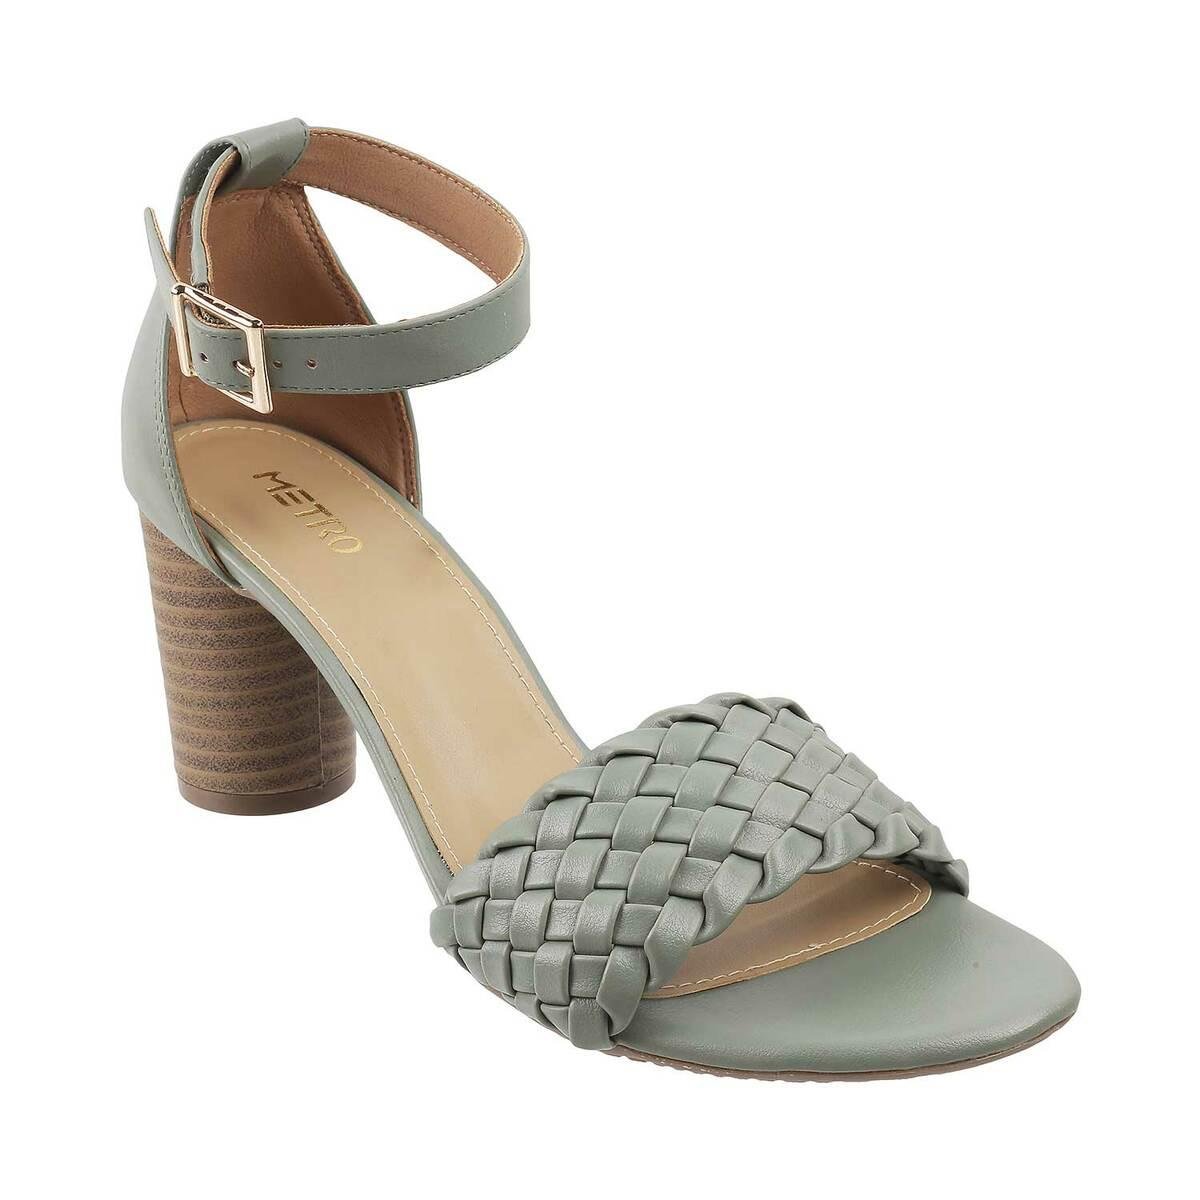 Buy Women Green Casual Sandals Online | SKU: 34-9959-21-34-Metro Shoes